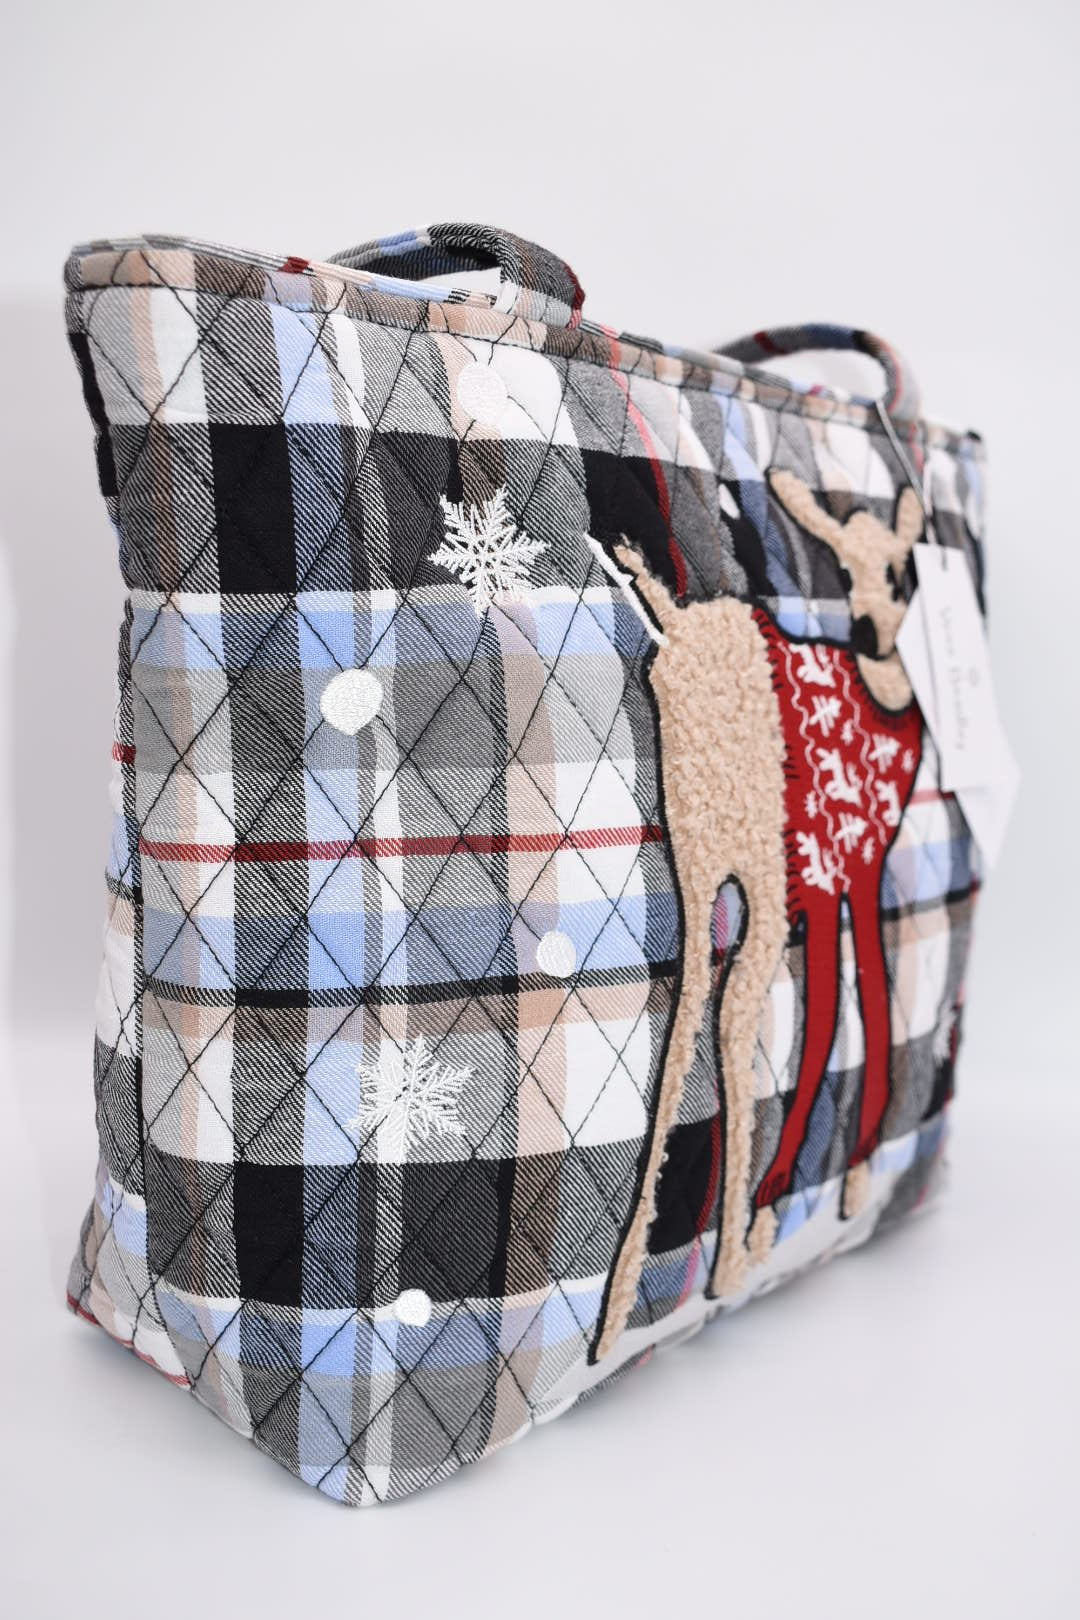 Vera Bradley Small Vera Tote Bag in "Merry Mischief Snow Day" Pattern